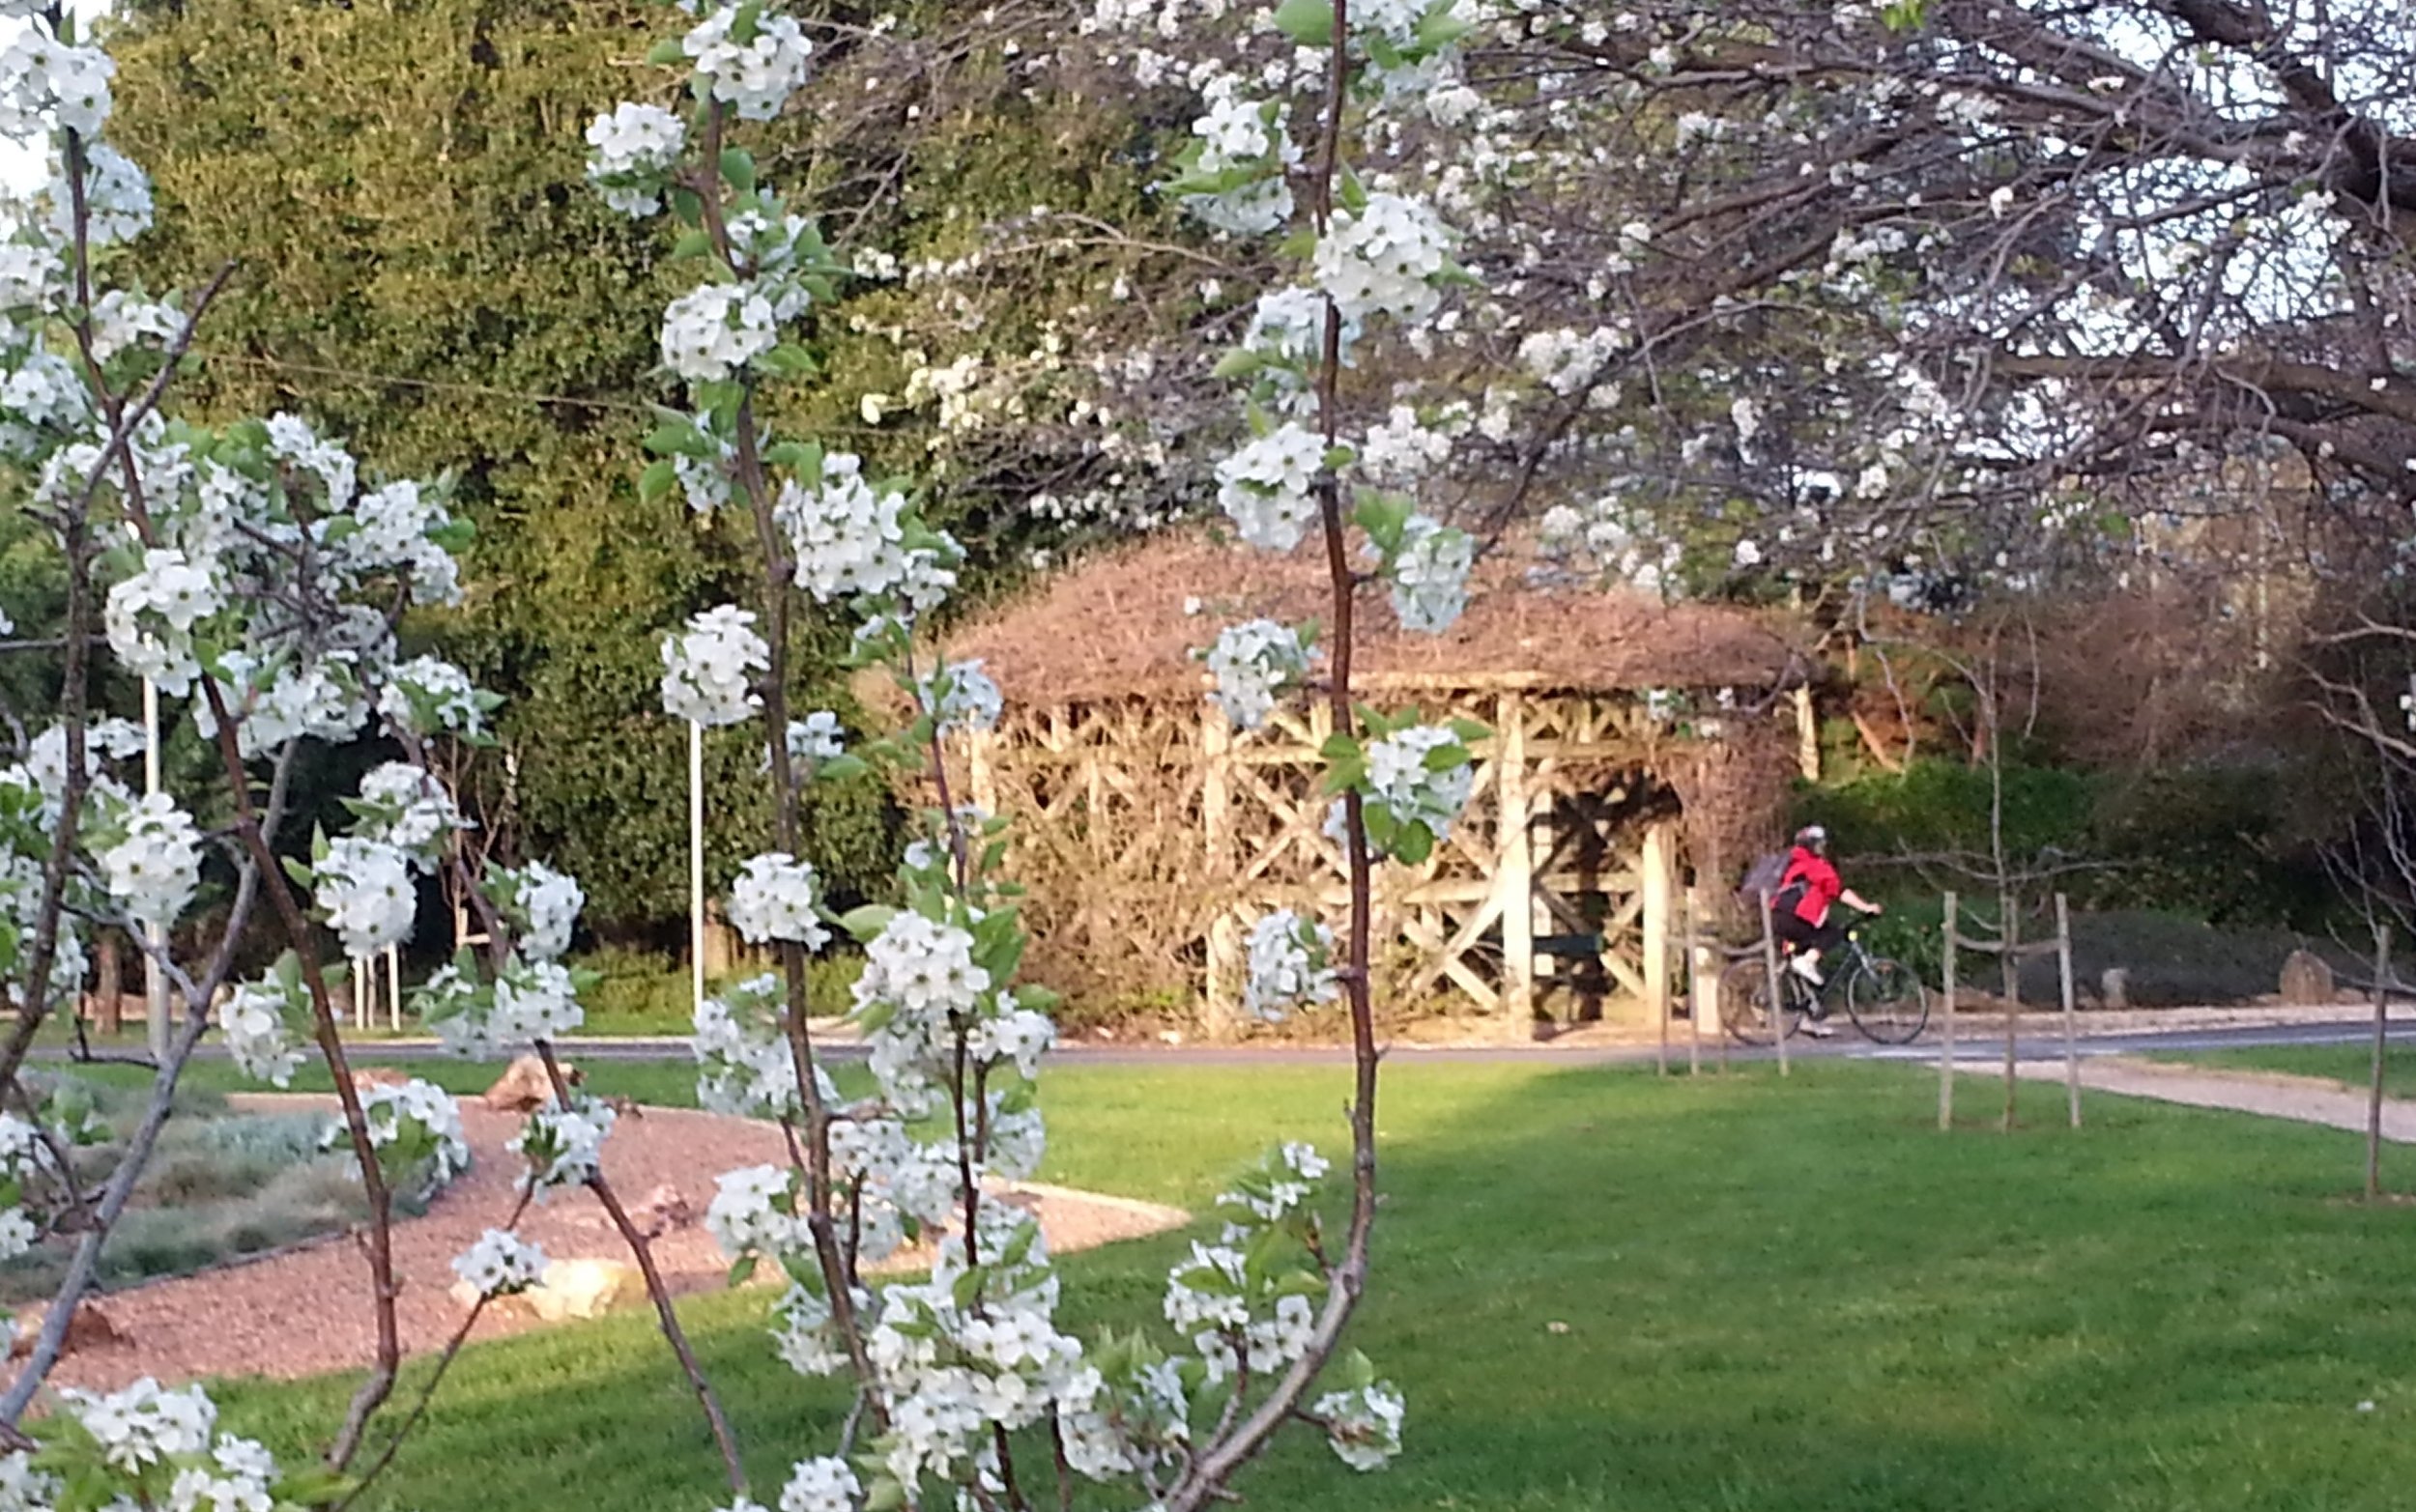 Osmond Gardens pergola in 2014